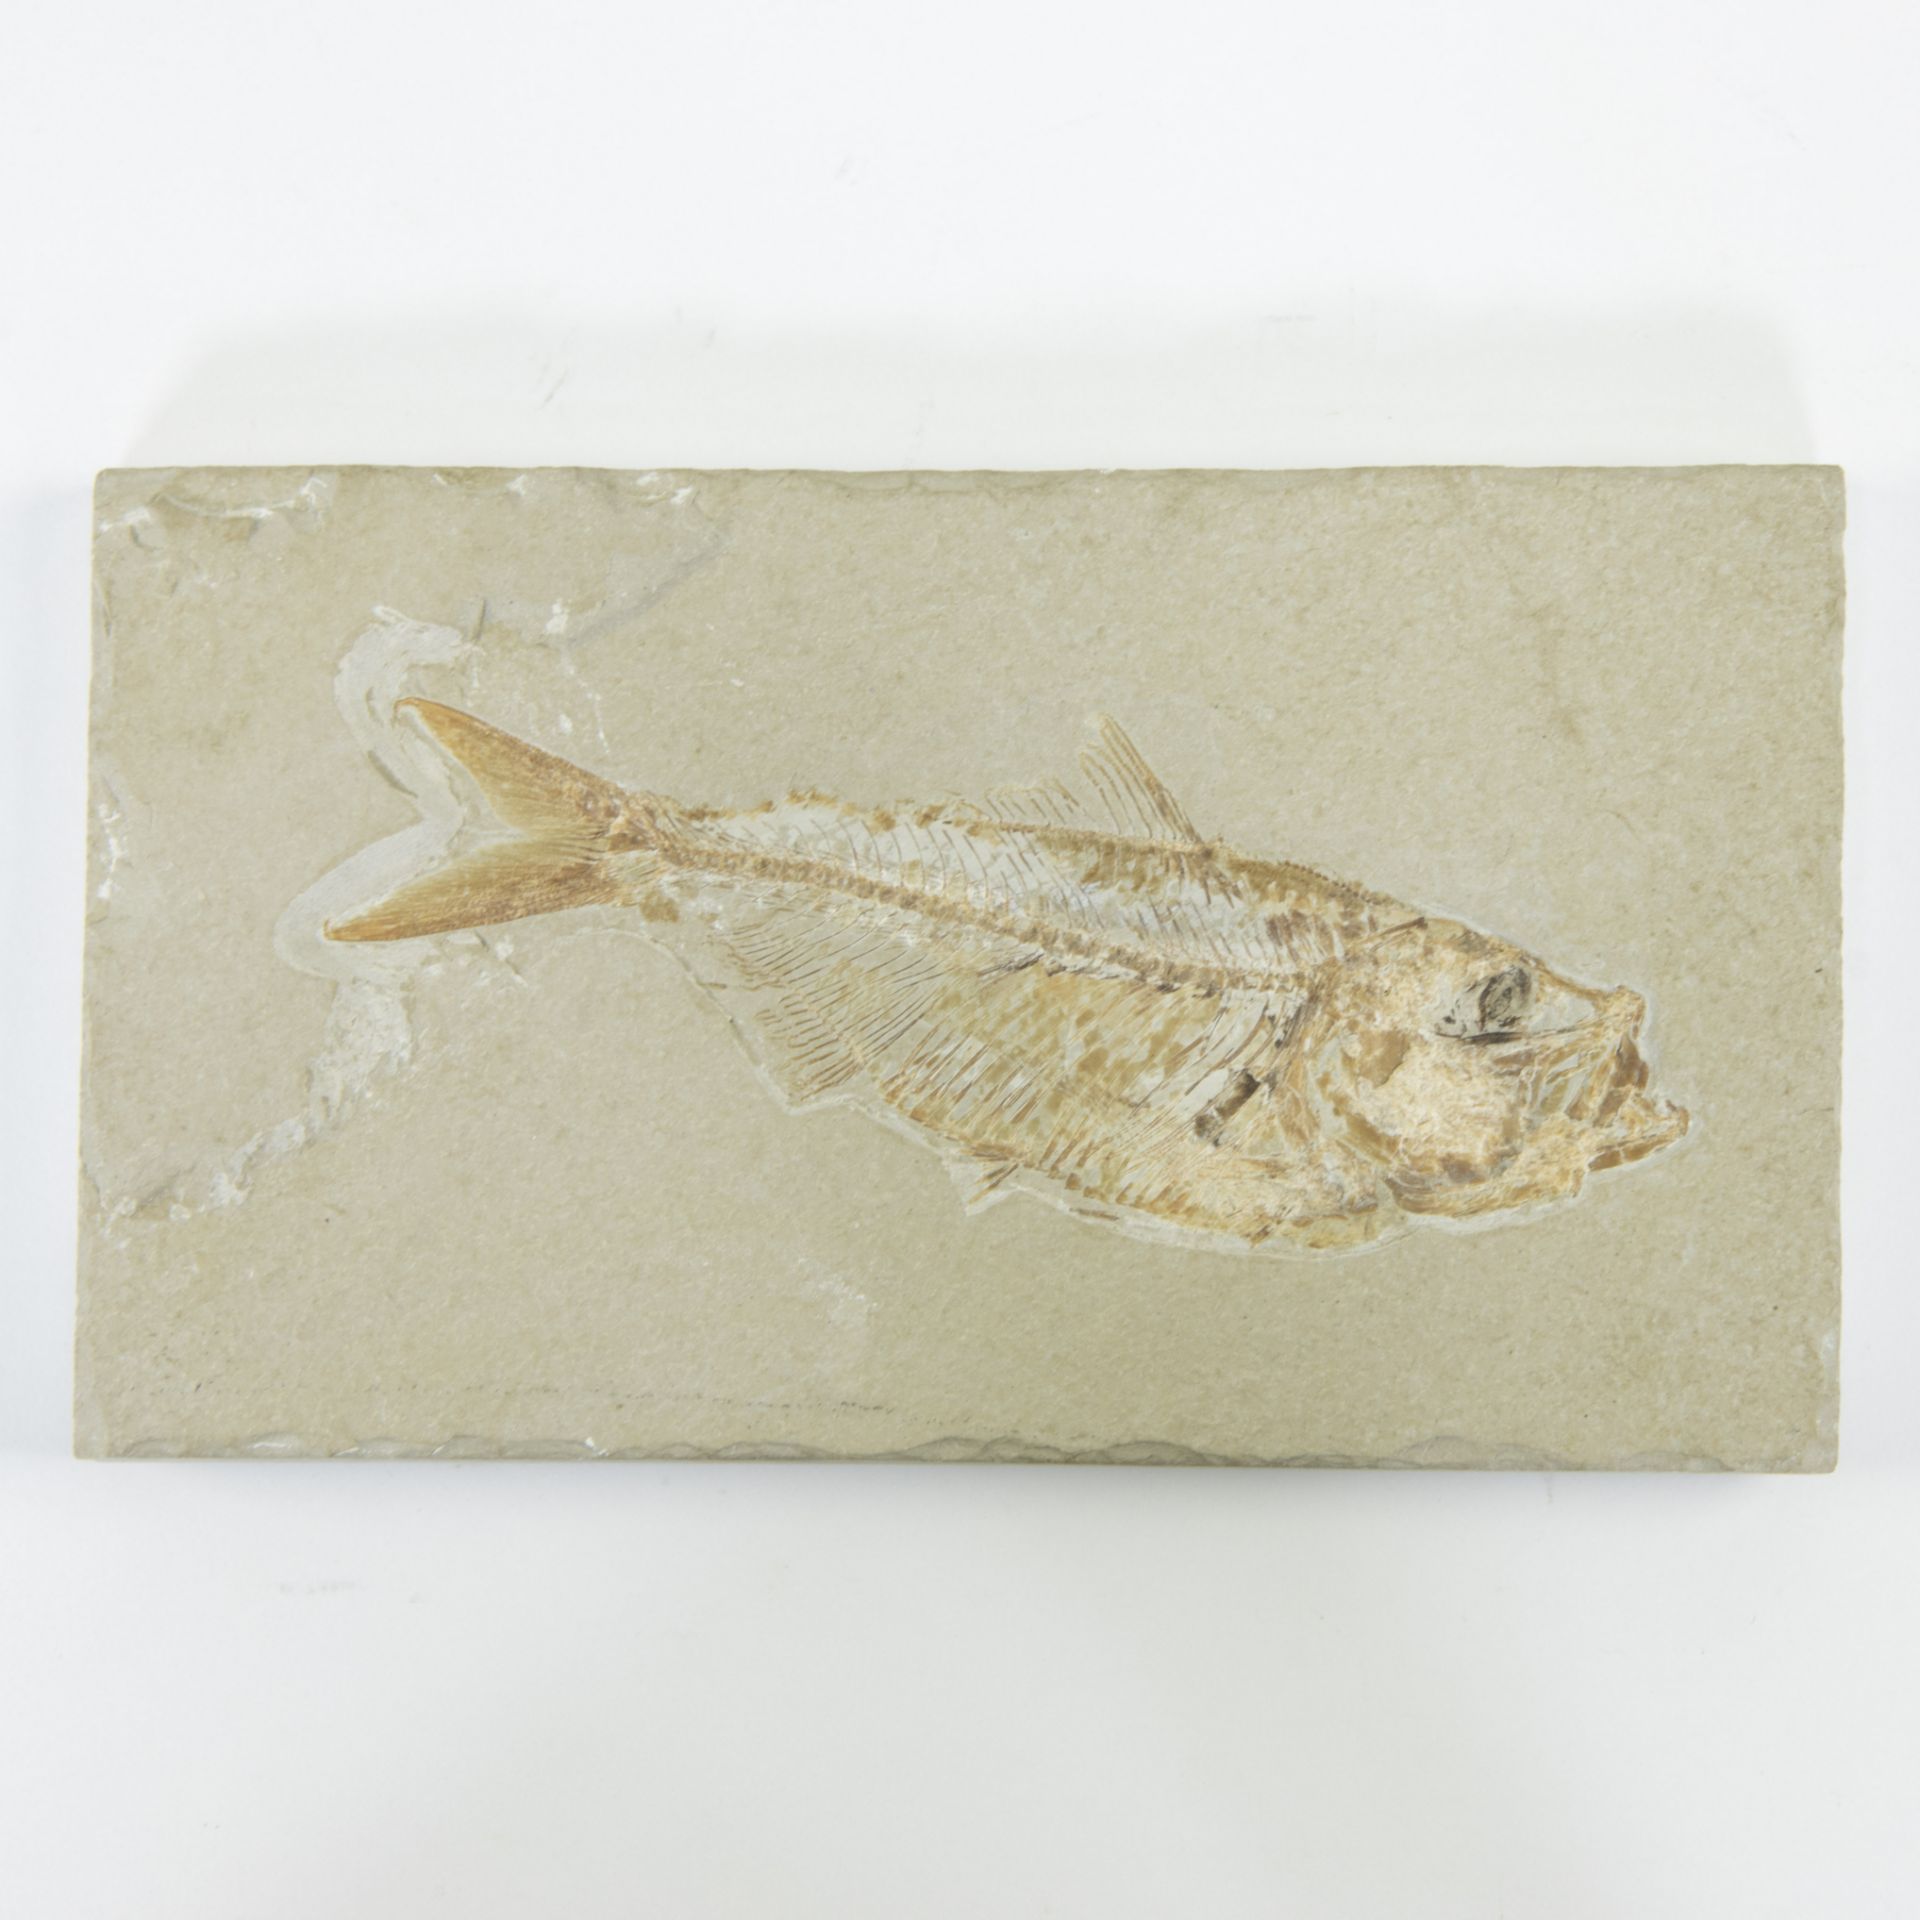 Fossil fish, Scombroclupea macrophthalma, Upper Cretaceous (90 milj y)